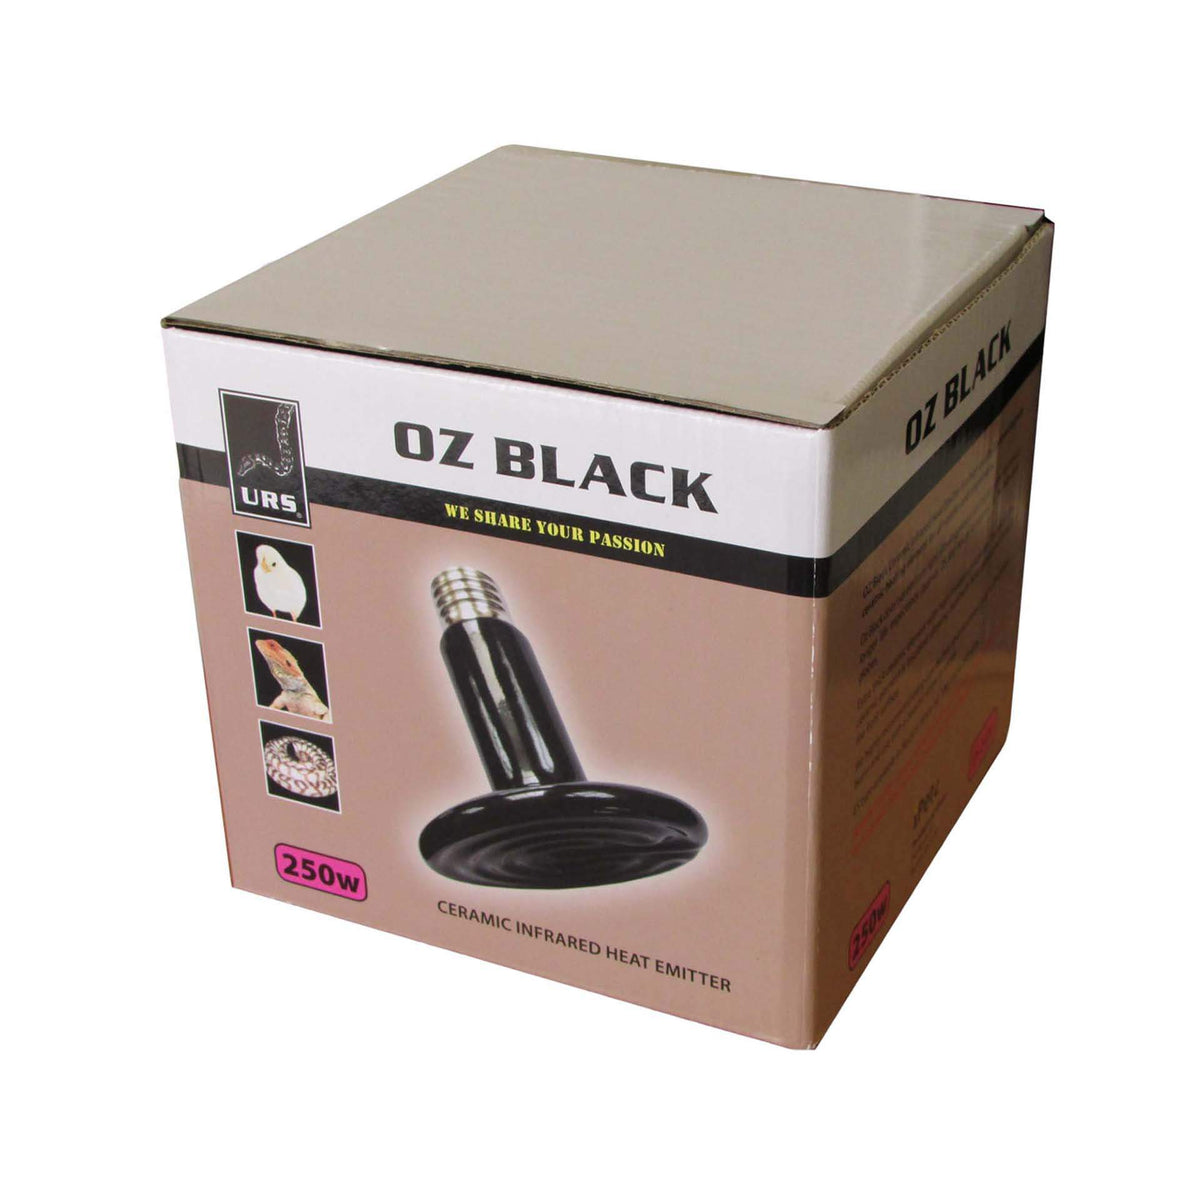 URS Oz Black Ceramic 250w